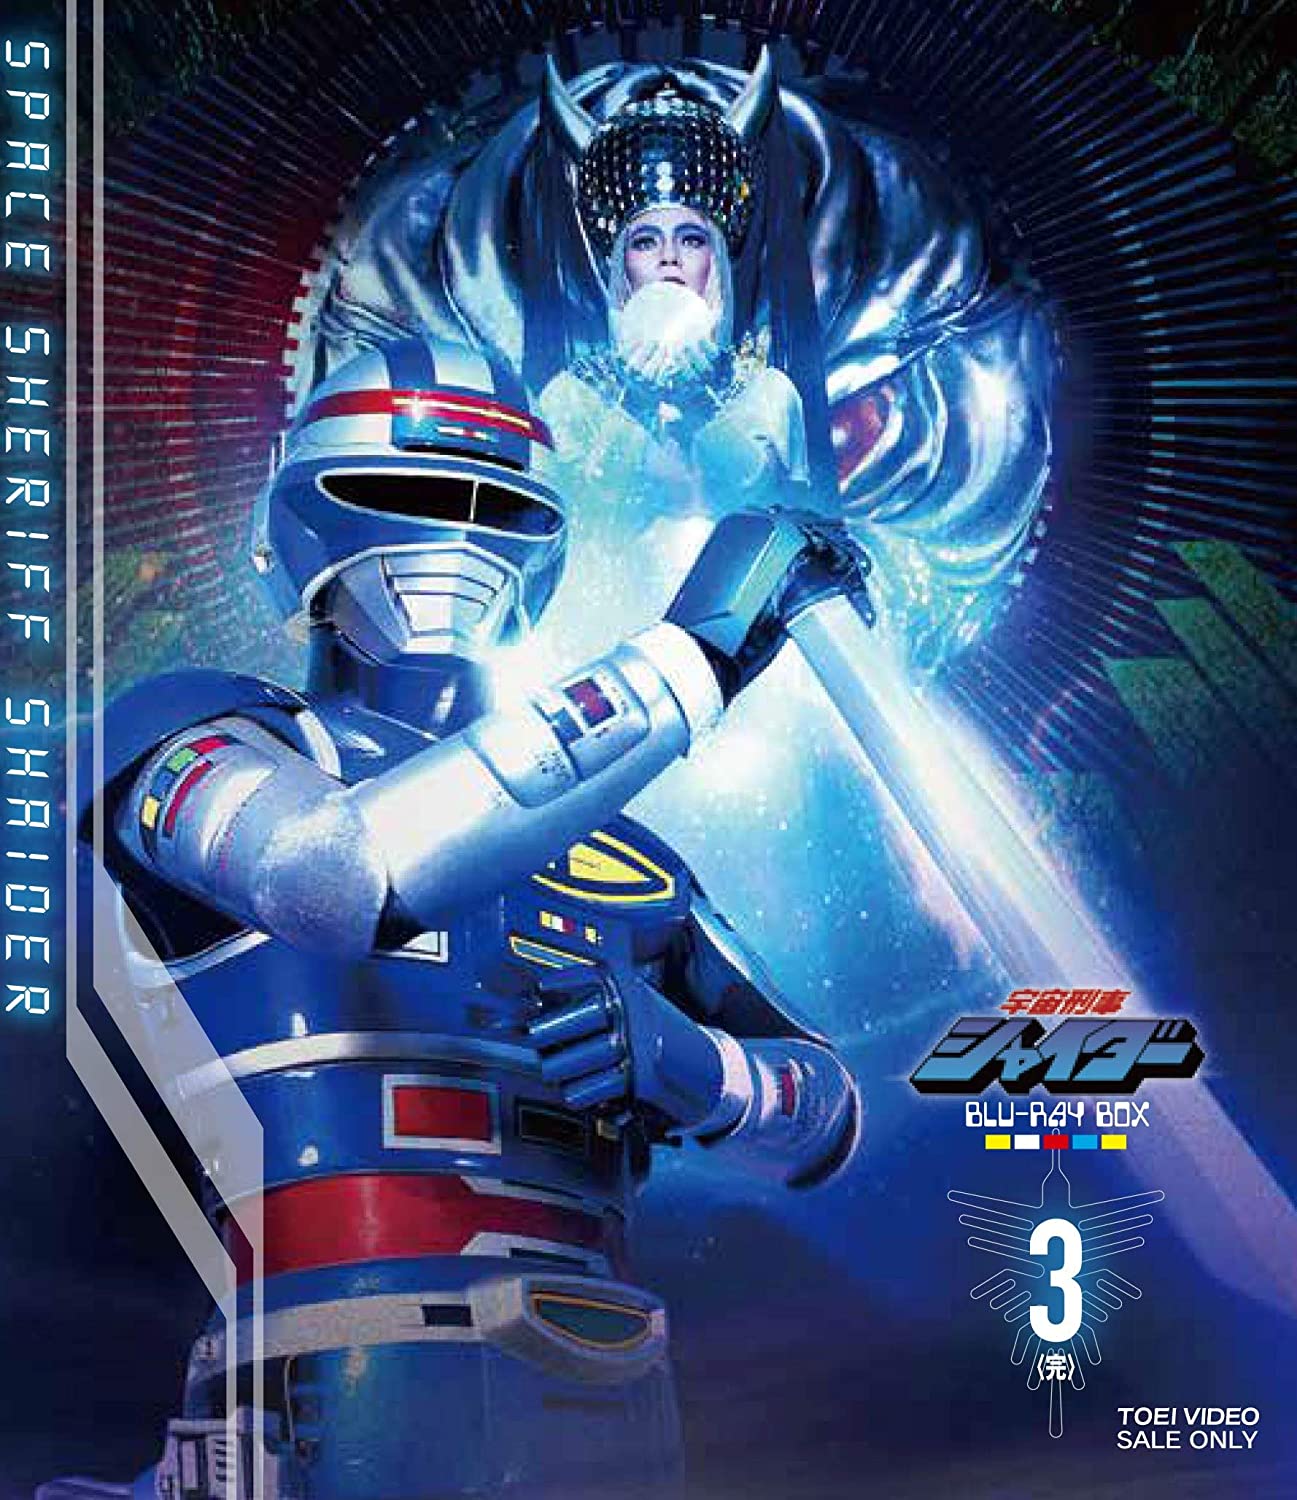 Space Sheriff Shaider Blu Ray BOX 3 JAPANESE EDITION, Movies & TV